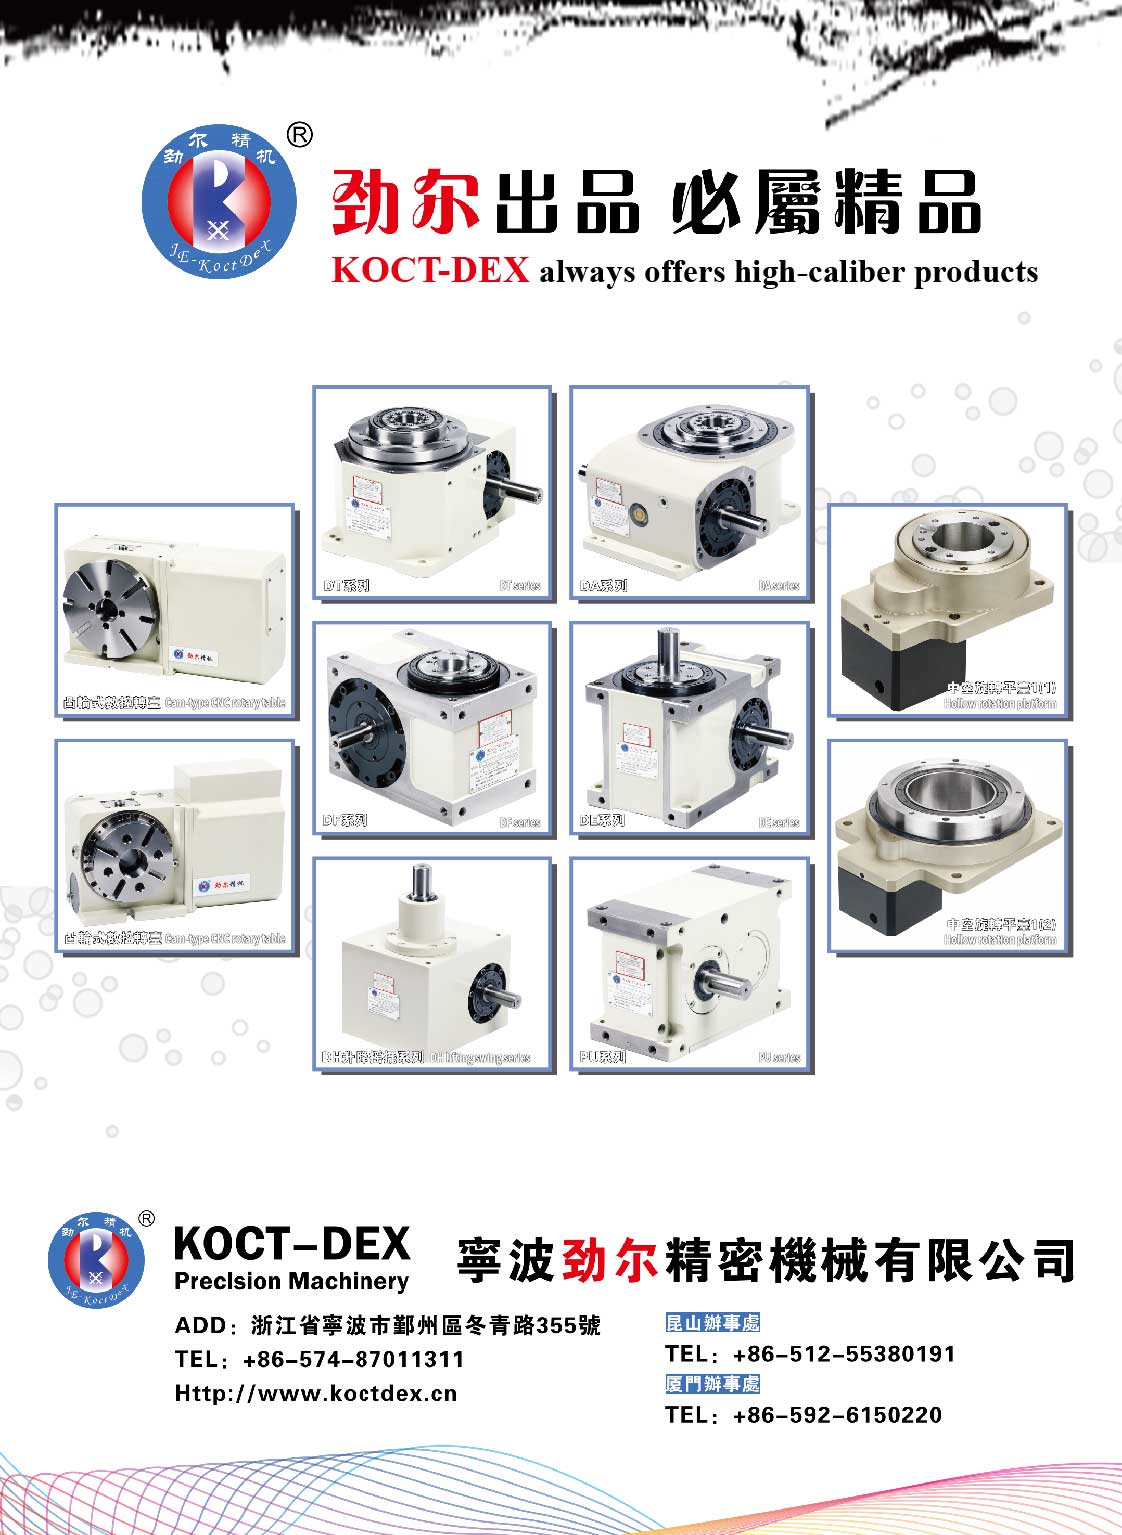 KOCT-DEX PRECISION MACHINERY CO., LTD.